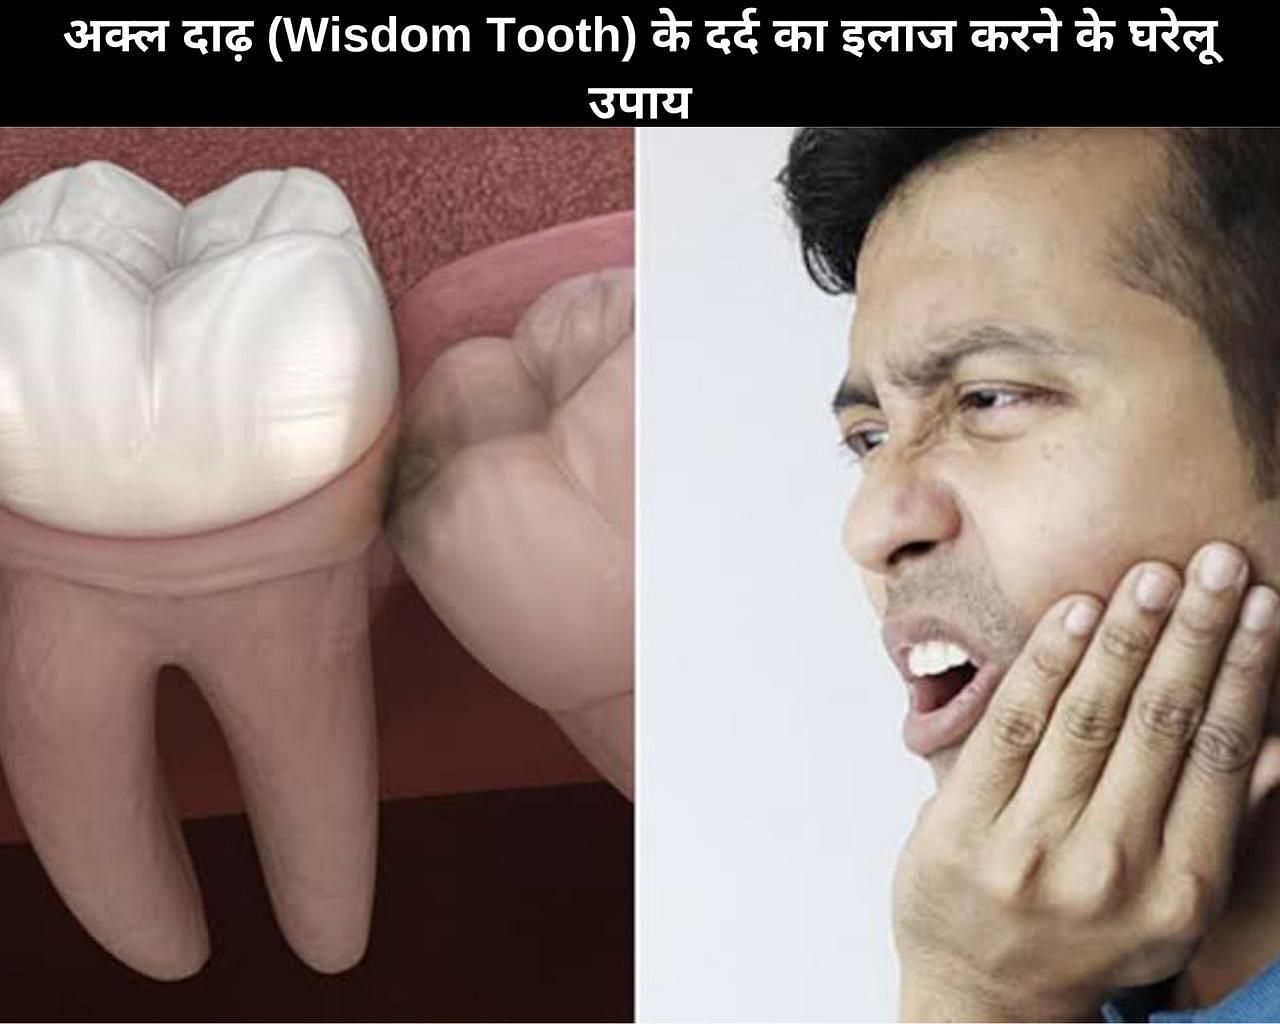 अक्ल दाढ़ (Wisdom Tooth) के दर्द का इलाज करने के 9 घरेलू उपाय (फोटो - sportskeedaहिन्दी)